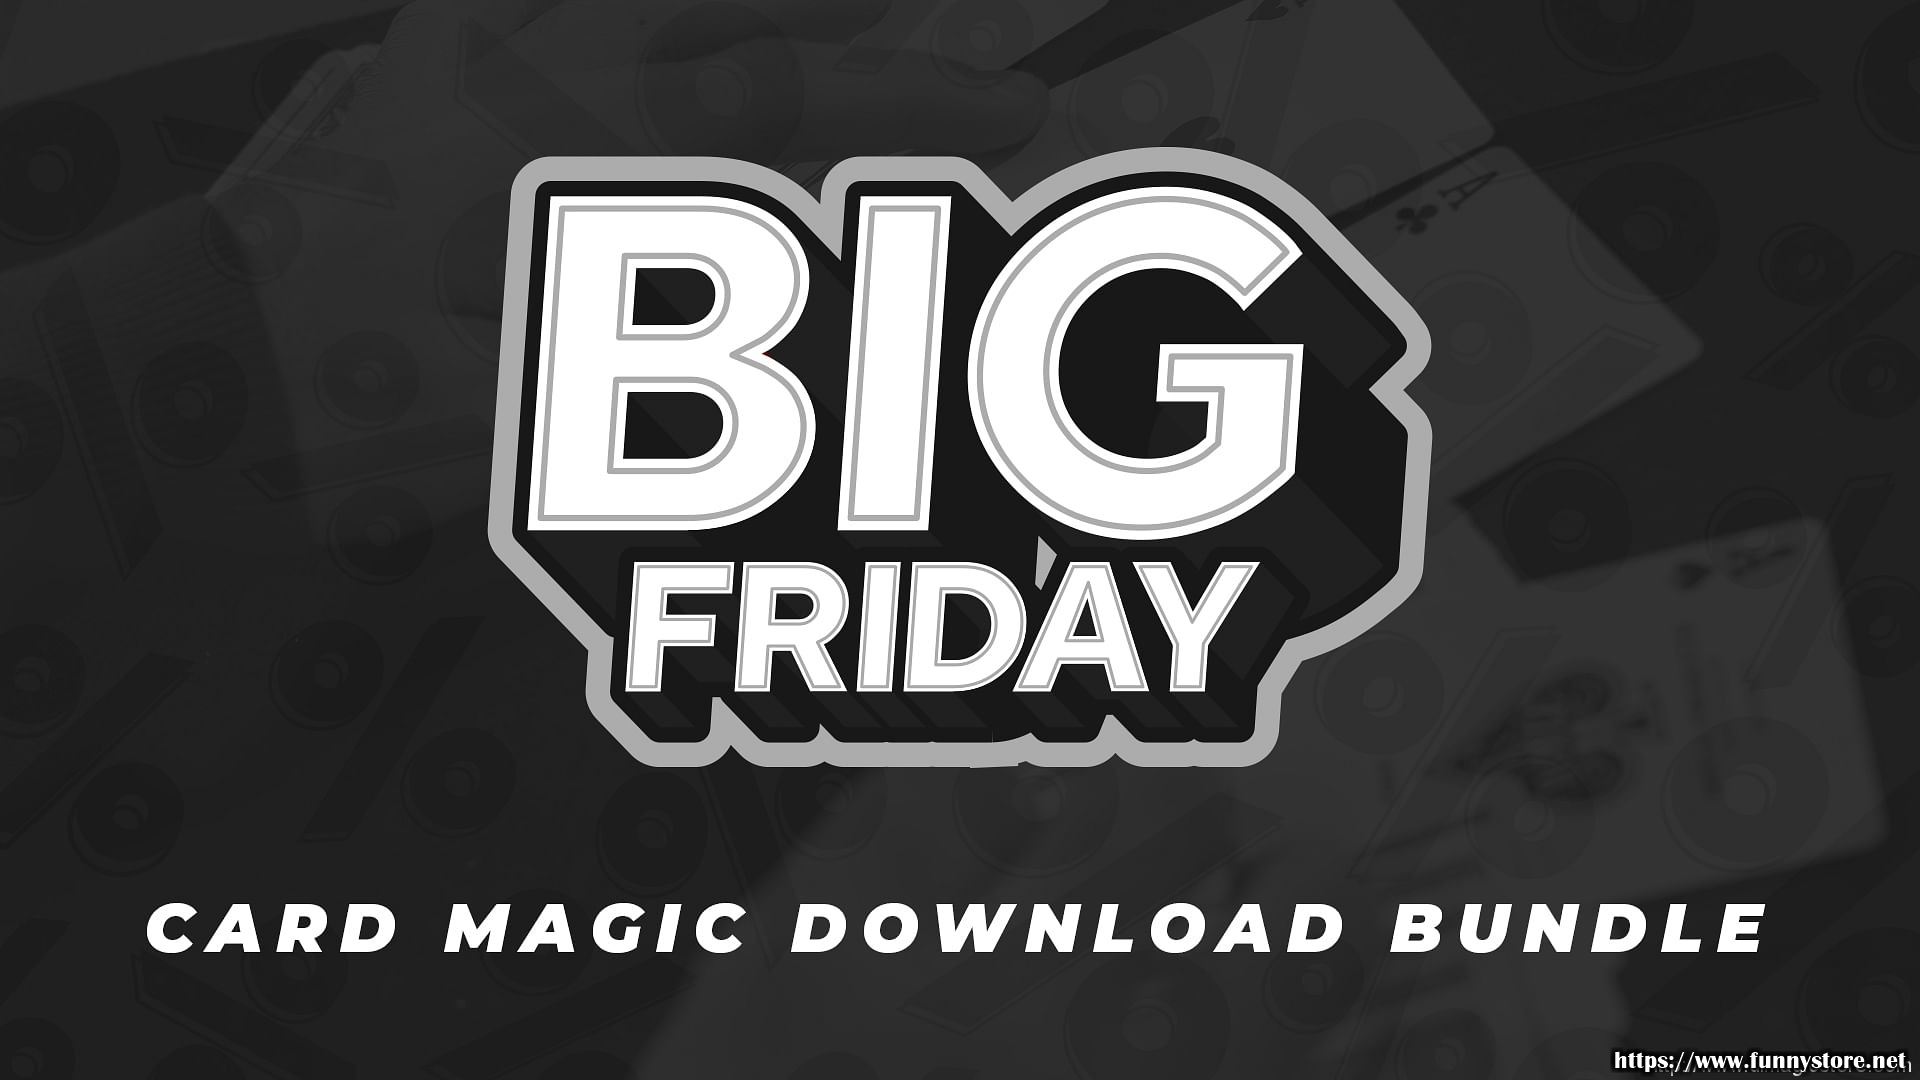 Vanishing Inc. - Card Magic Download Bundle (Big Friday 2020)